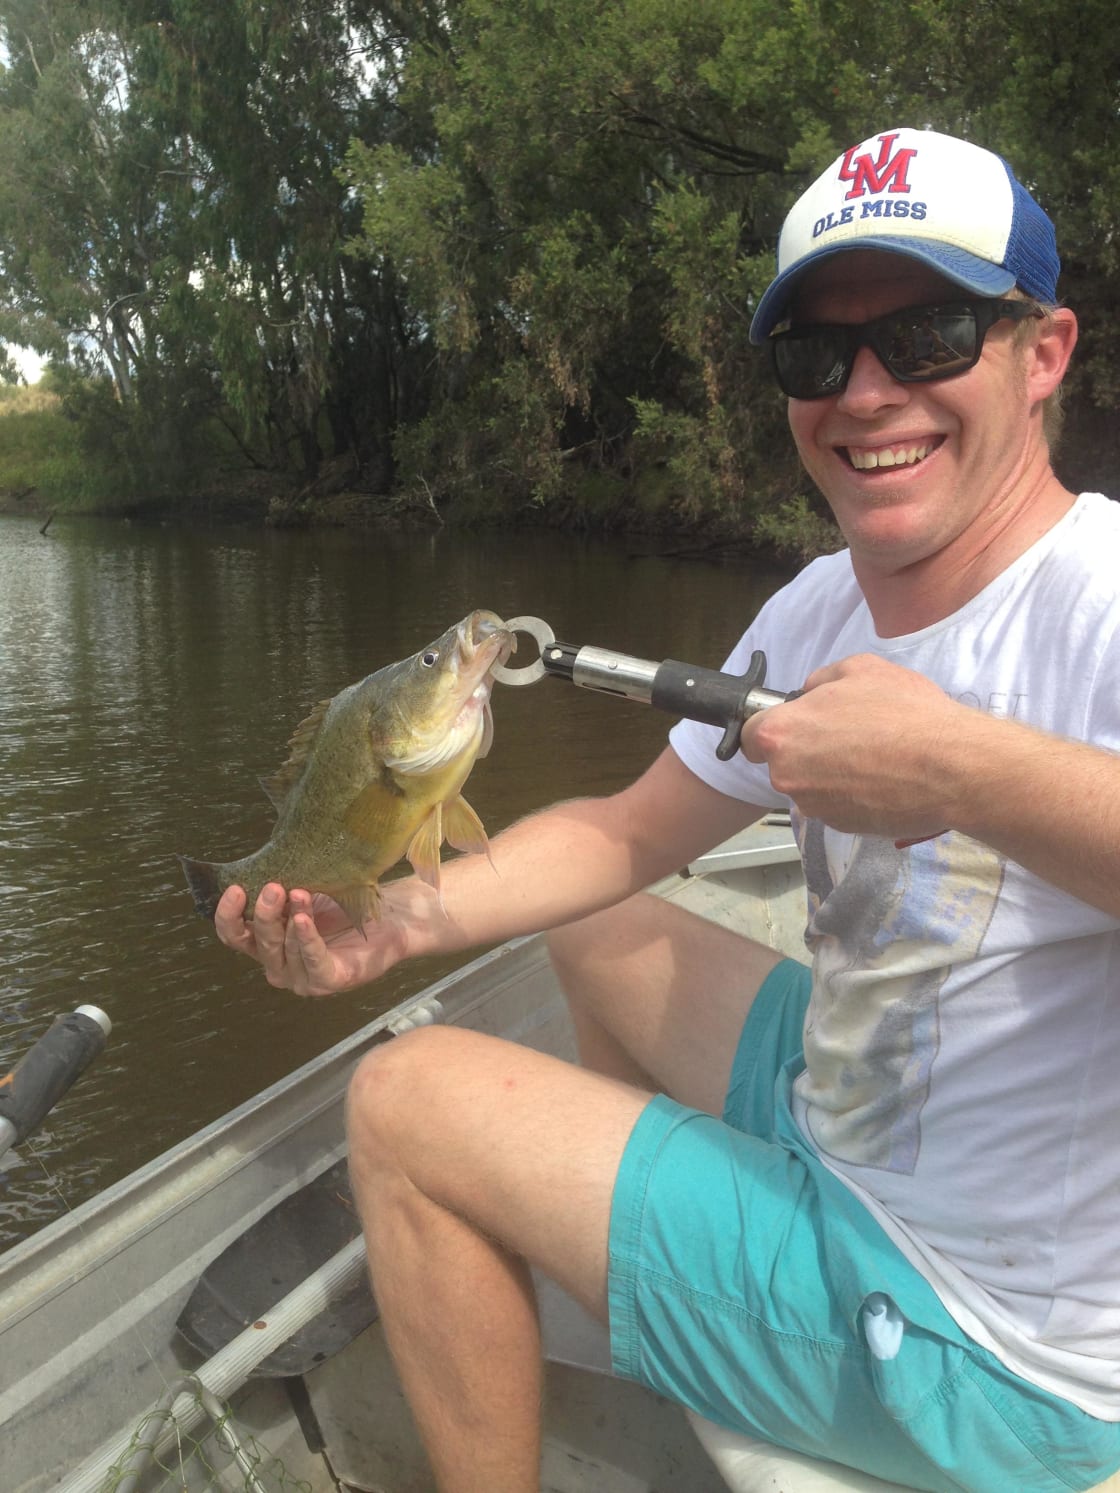 Brad's caught a fish